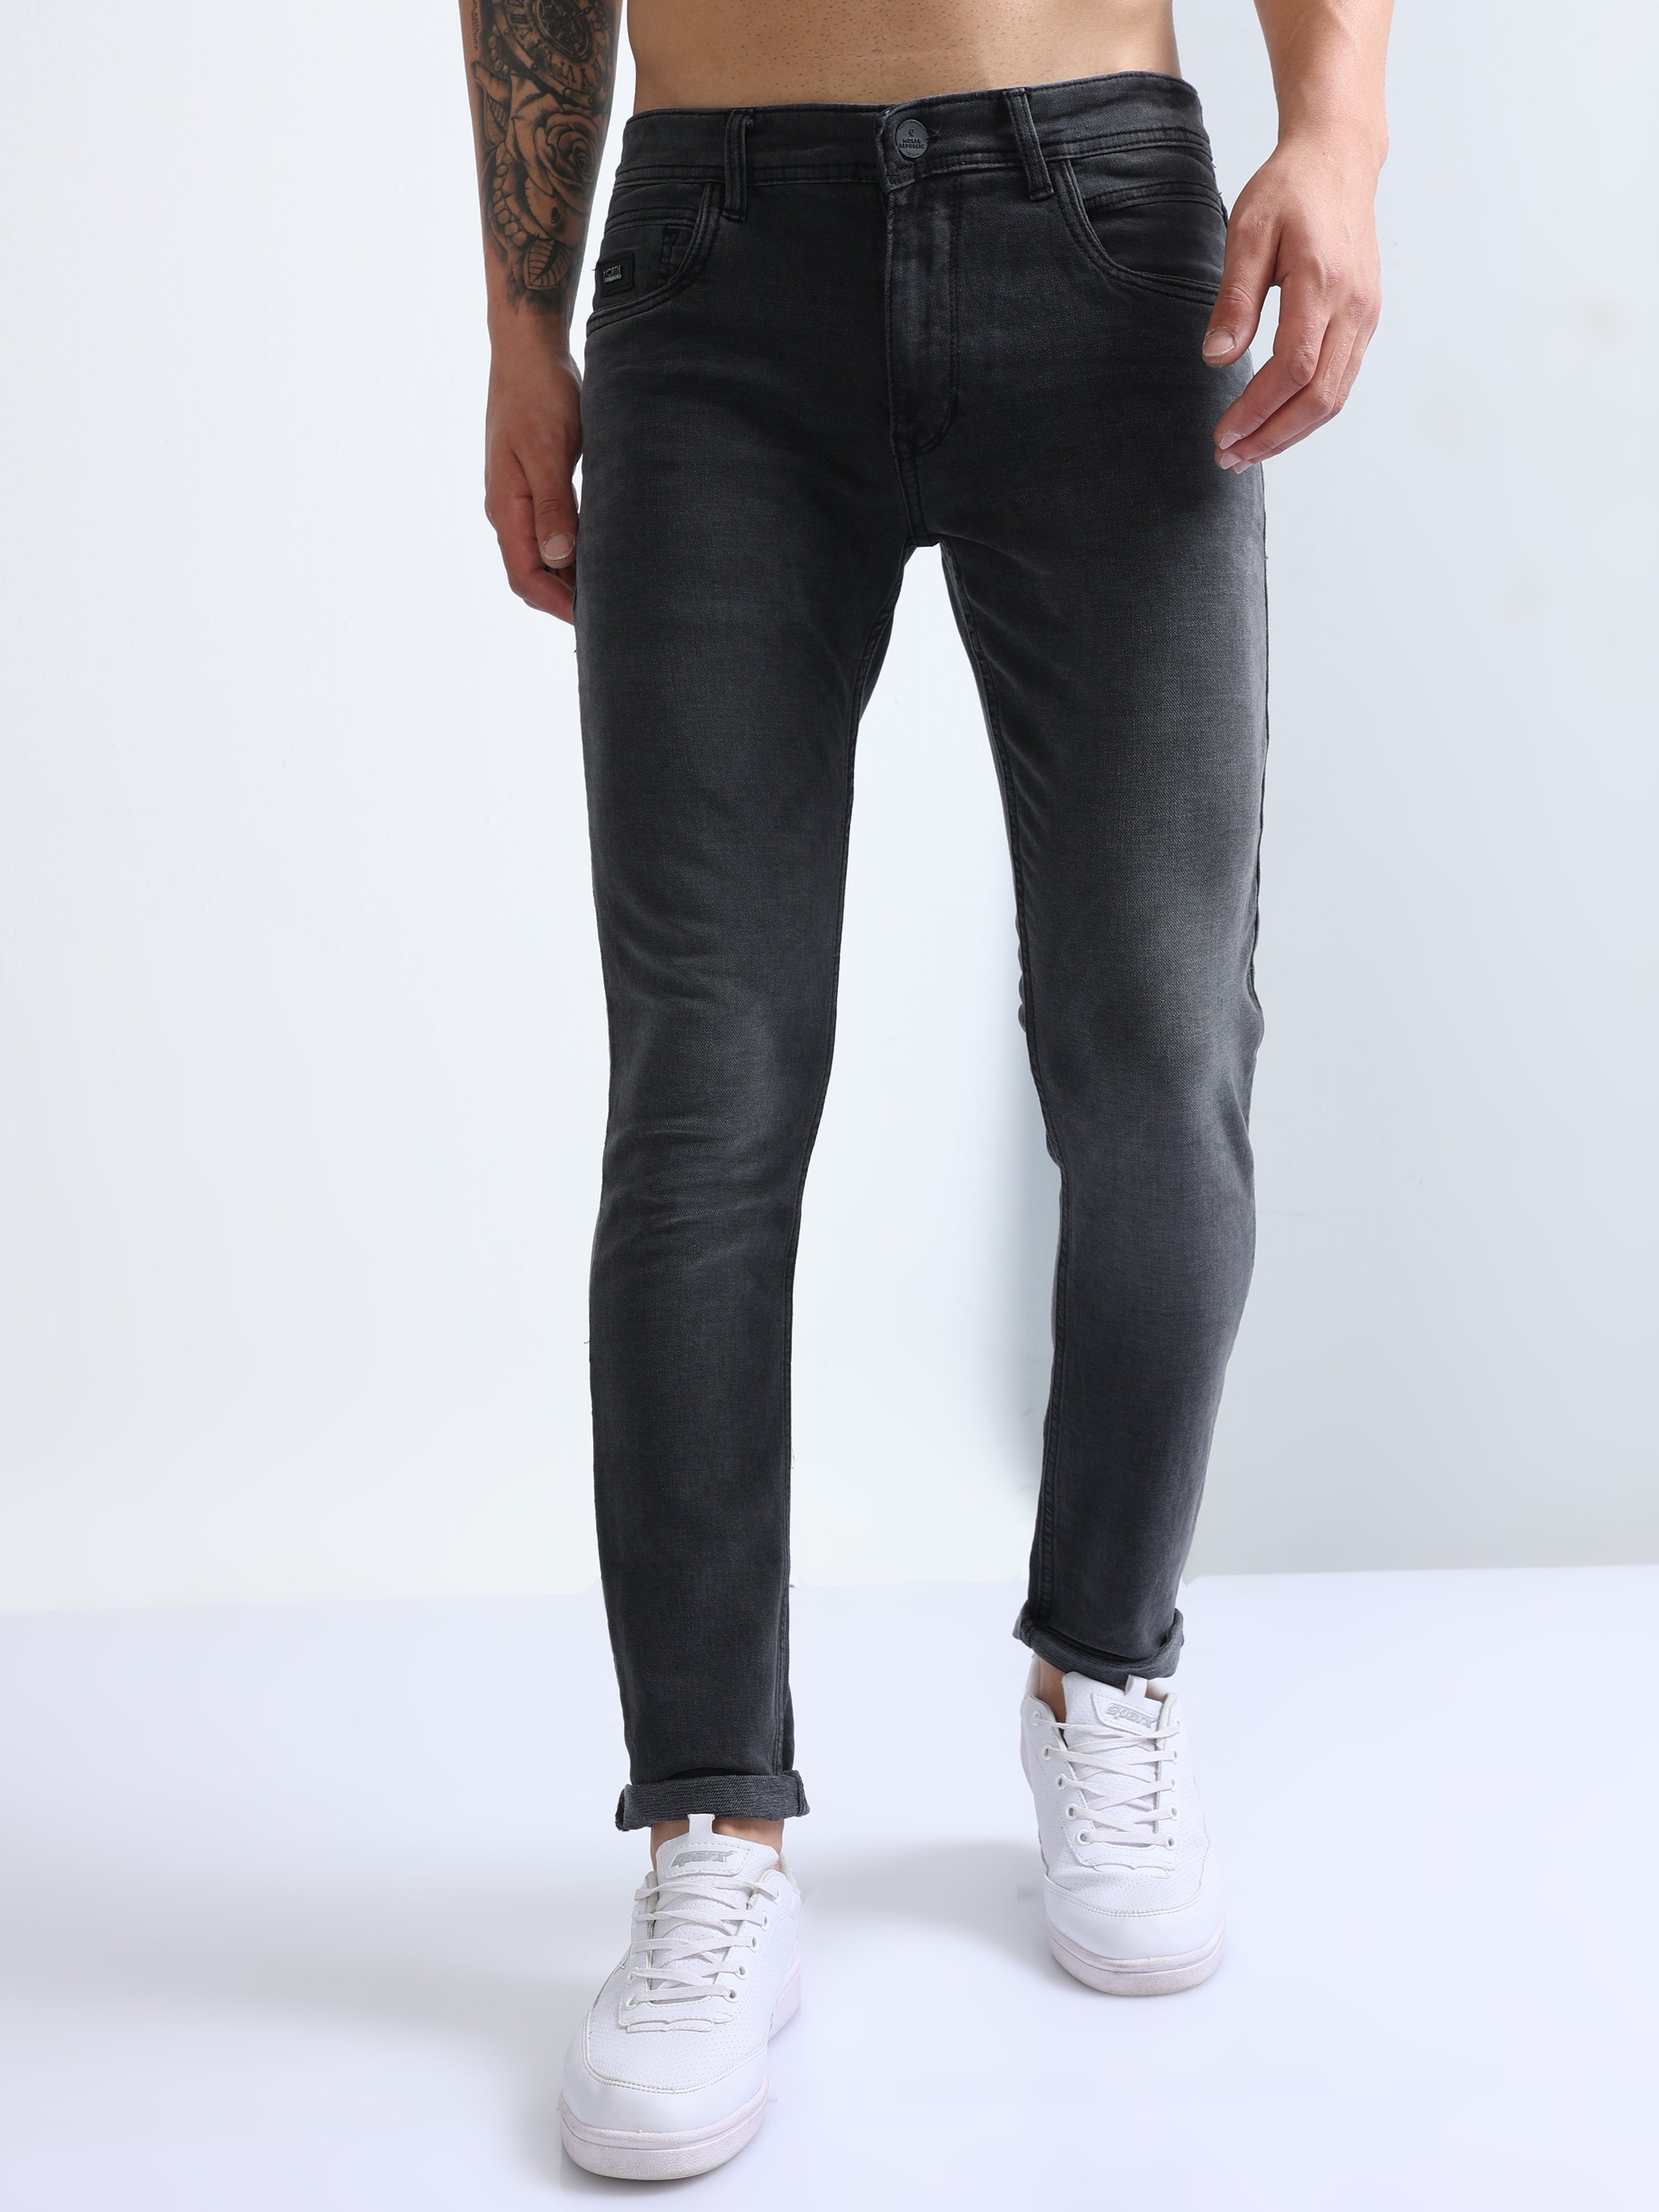 Men Black Faded Denim Jeans, for Skin Friendly, Shrink Resistance, Easily  Washable, Waist Size : Small at Best Price in Kolkata